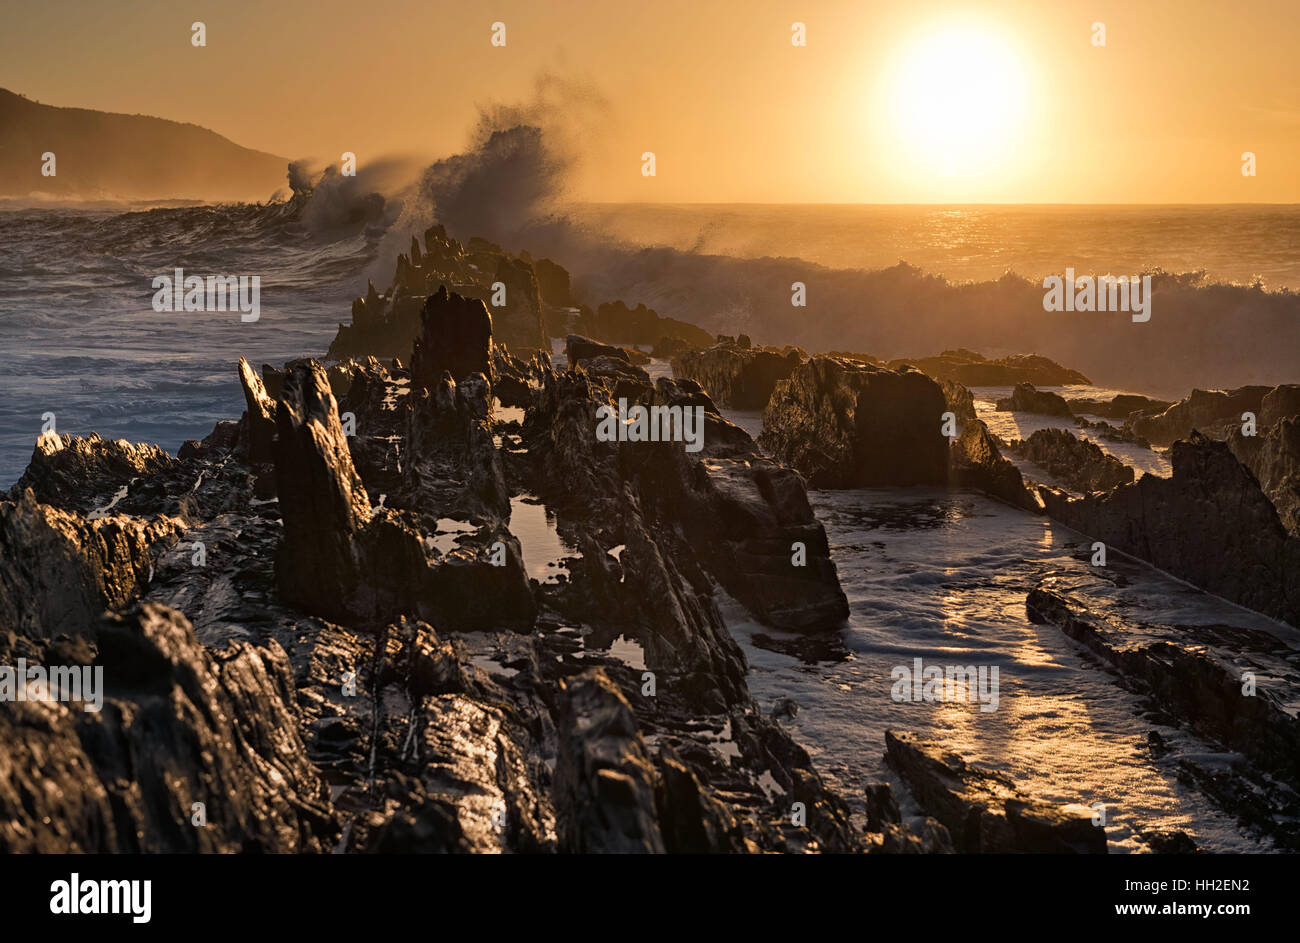 Wellen zum Absturz gegen schroffe Felsen während des Sonnenuntergangs am Storms River, Südafrika Stockfoto